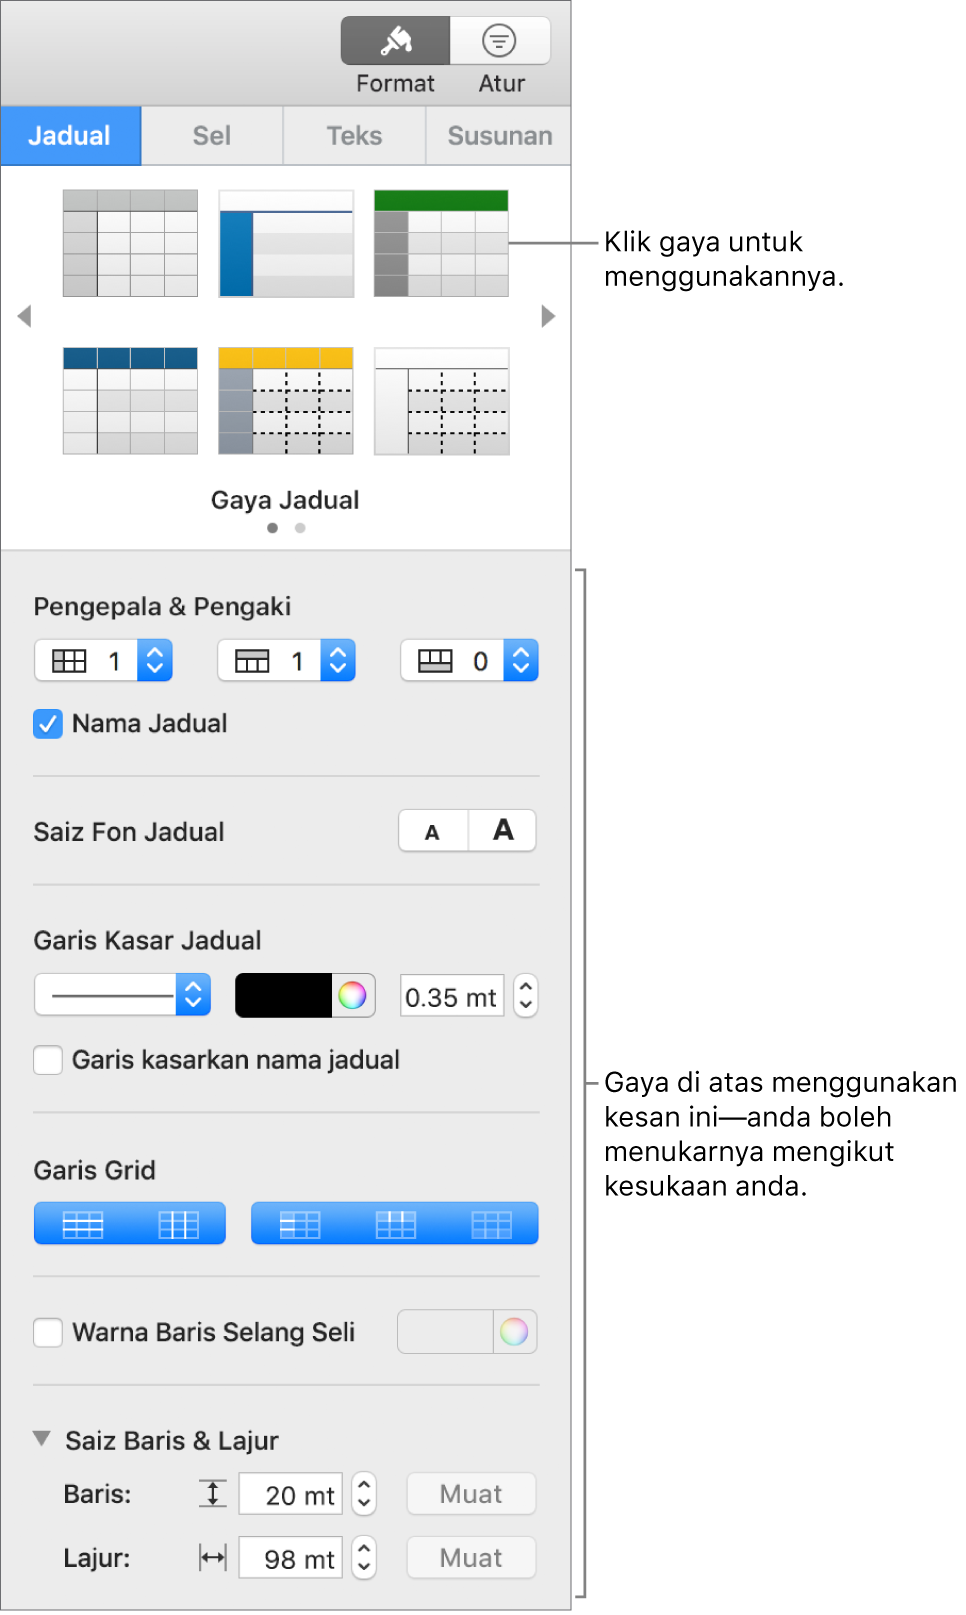 Bar sisi Format menunjukkan pilihan gaya jadual dan pemformatan.